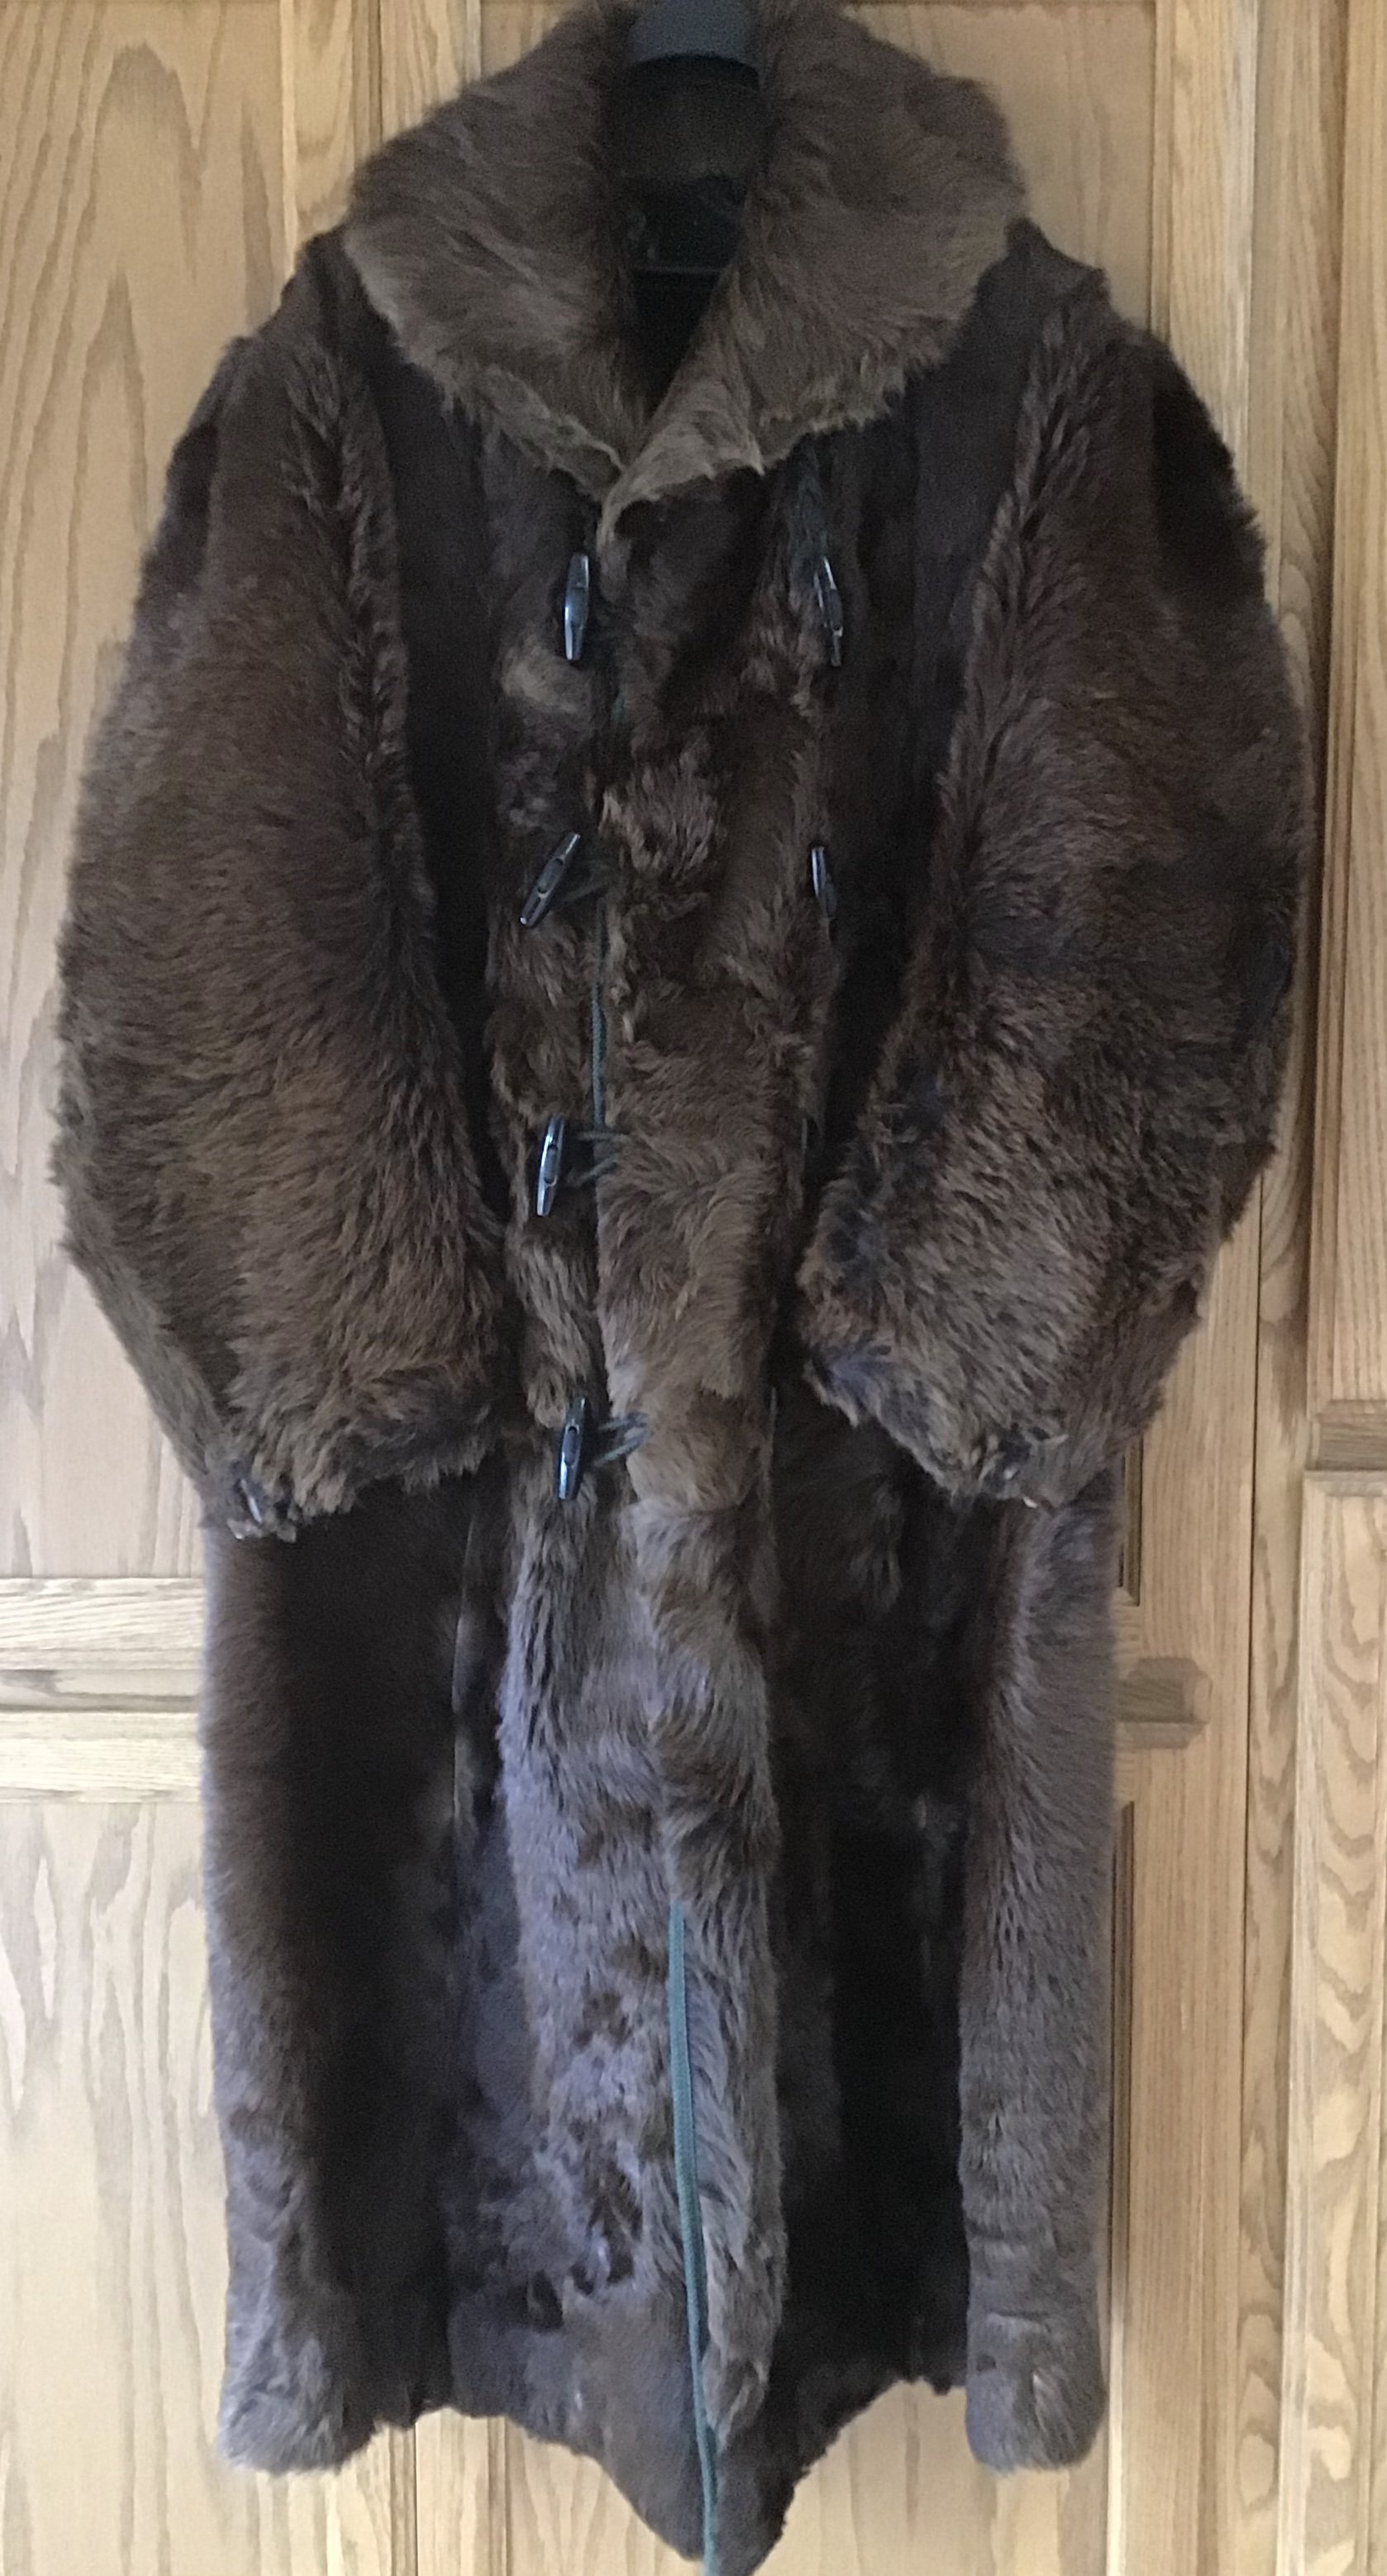 Antique,original,brown bear coat, - SASS Wire Classifieds - SASS Wire Forum